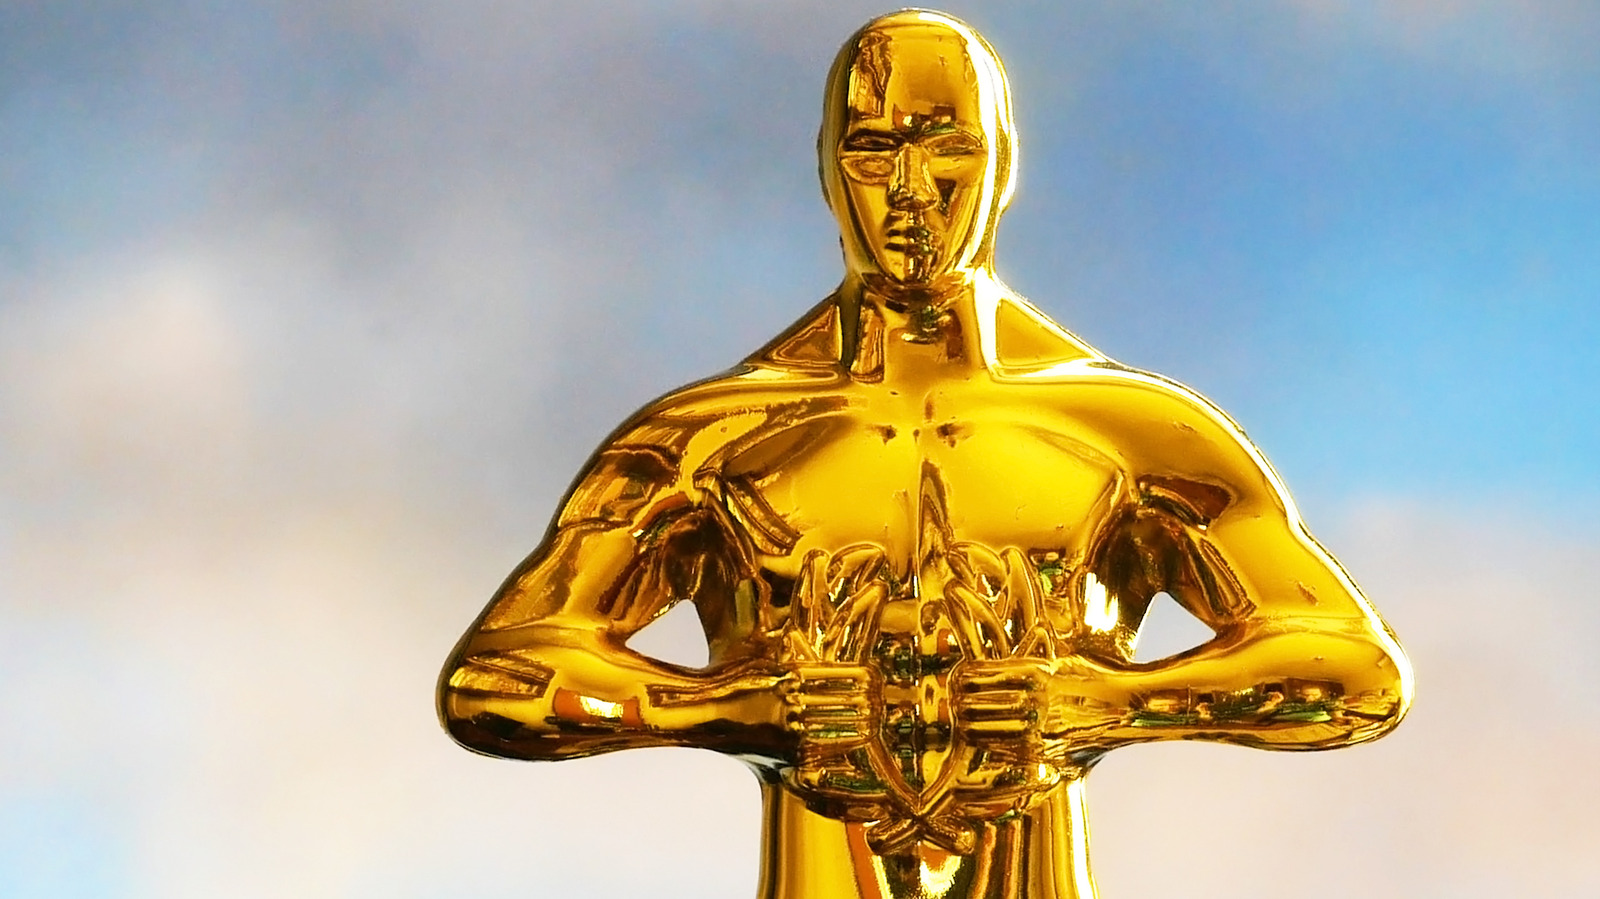 #The Oscars’ Plan For ‘Highlight Reel’ Of Certain Awards Sparks Backlash